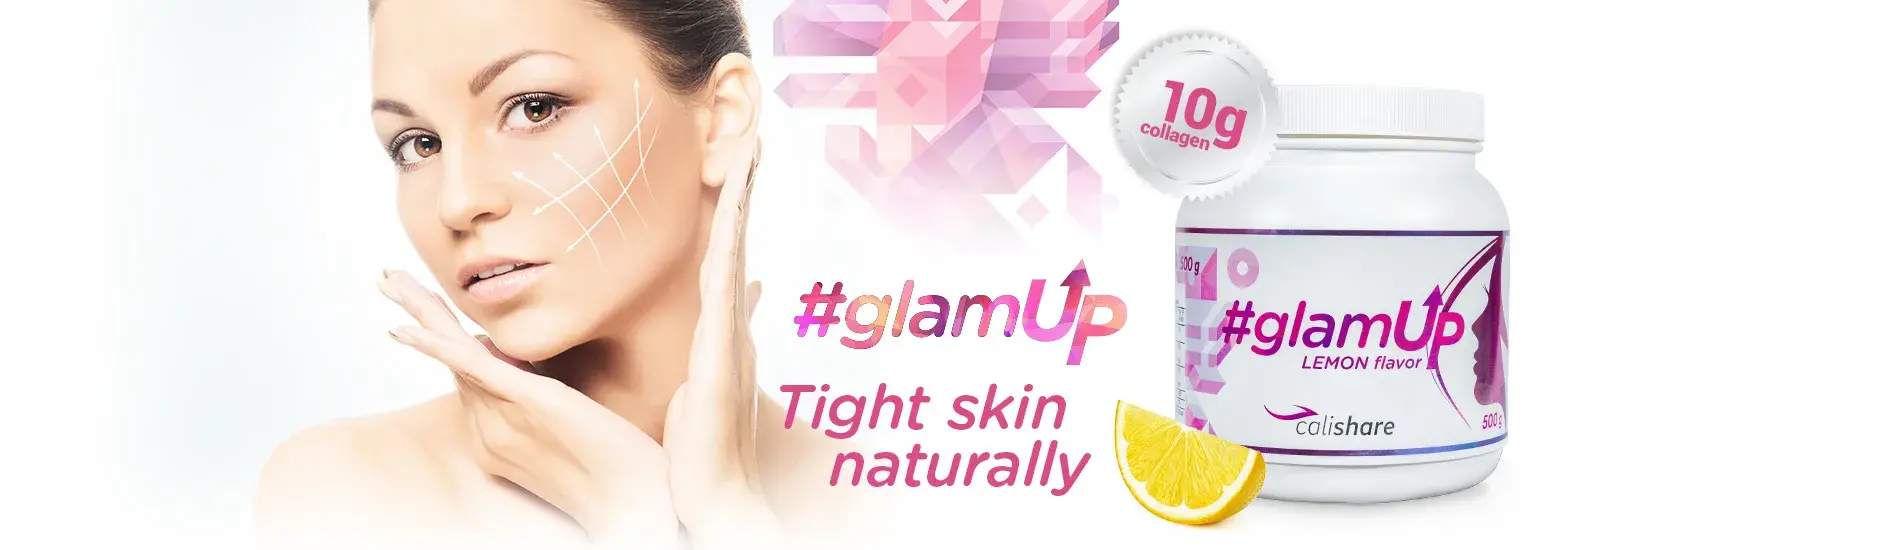 #Glamup - Σφιχτό δέρμα φυσικά